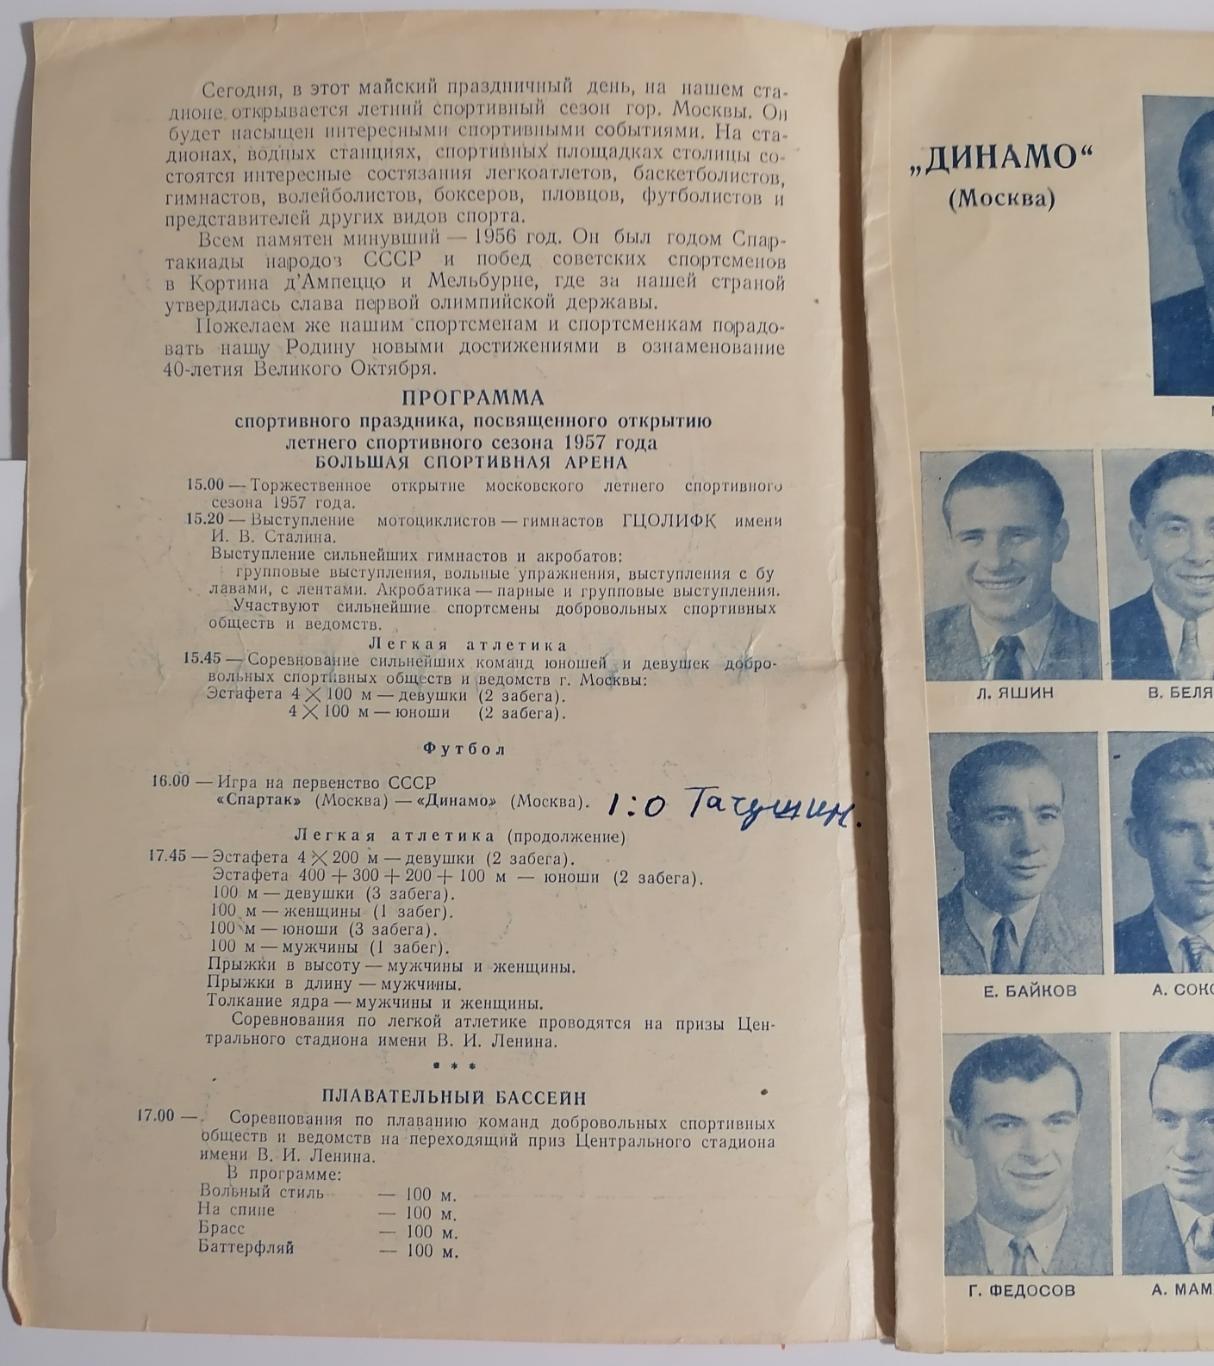 СПАРТАК МОСКВА - ДИНАМО МОСКВА 1957 официальная программа 1